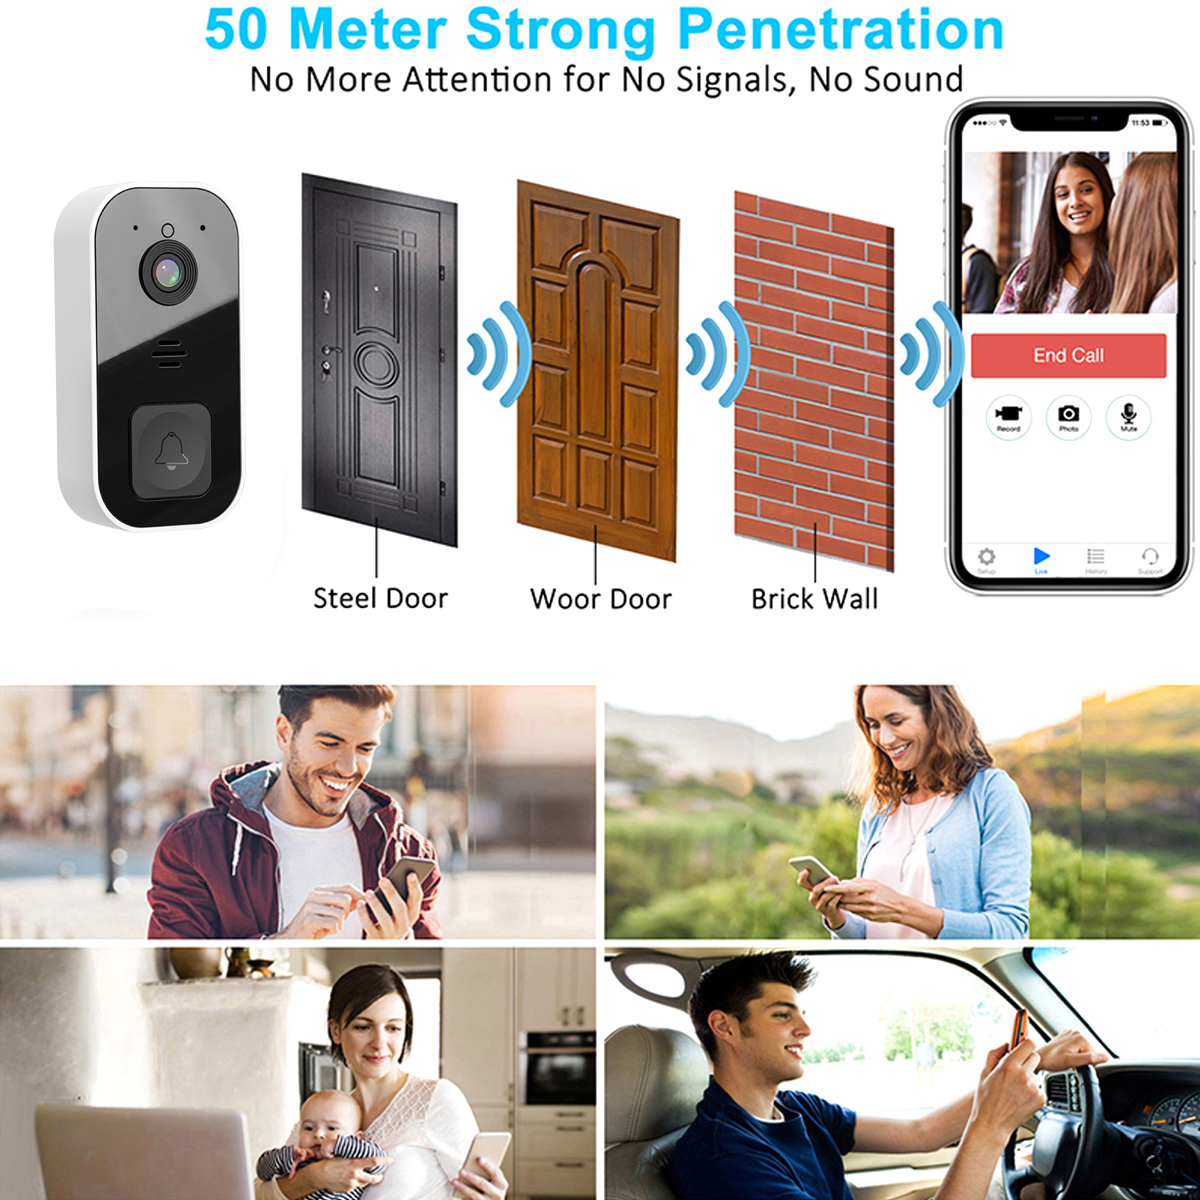 Smart-Home-Appliances-Video-Doorbell-Wireless-Doorbell-Camera1080p-HD-Video-2-way-Audio-IP65-Smart-Security-Door-Bell-with-Cloud-Storage-Night-Vision-Real-Time-Monitor-45